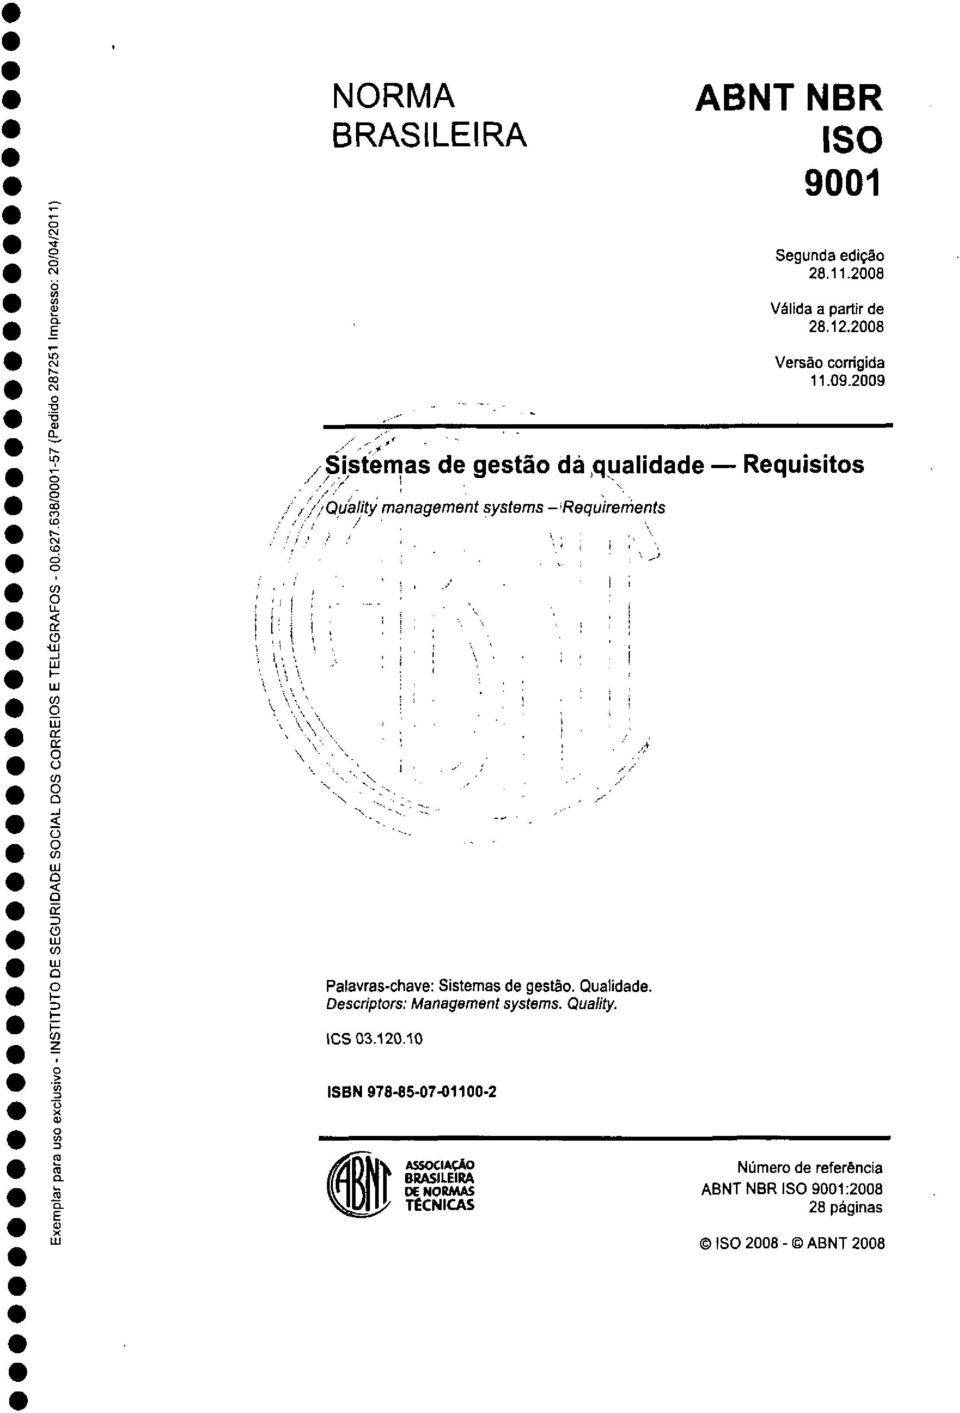 2009 /Sistemas de gestã dá qualidade Requisits / ///uality management systems -'Requirements \ \ '.